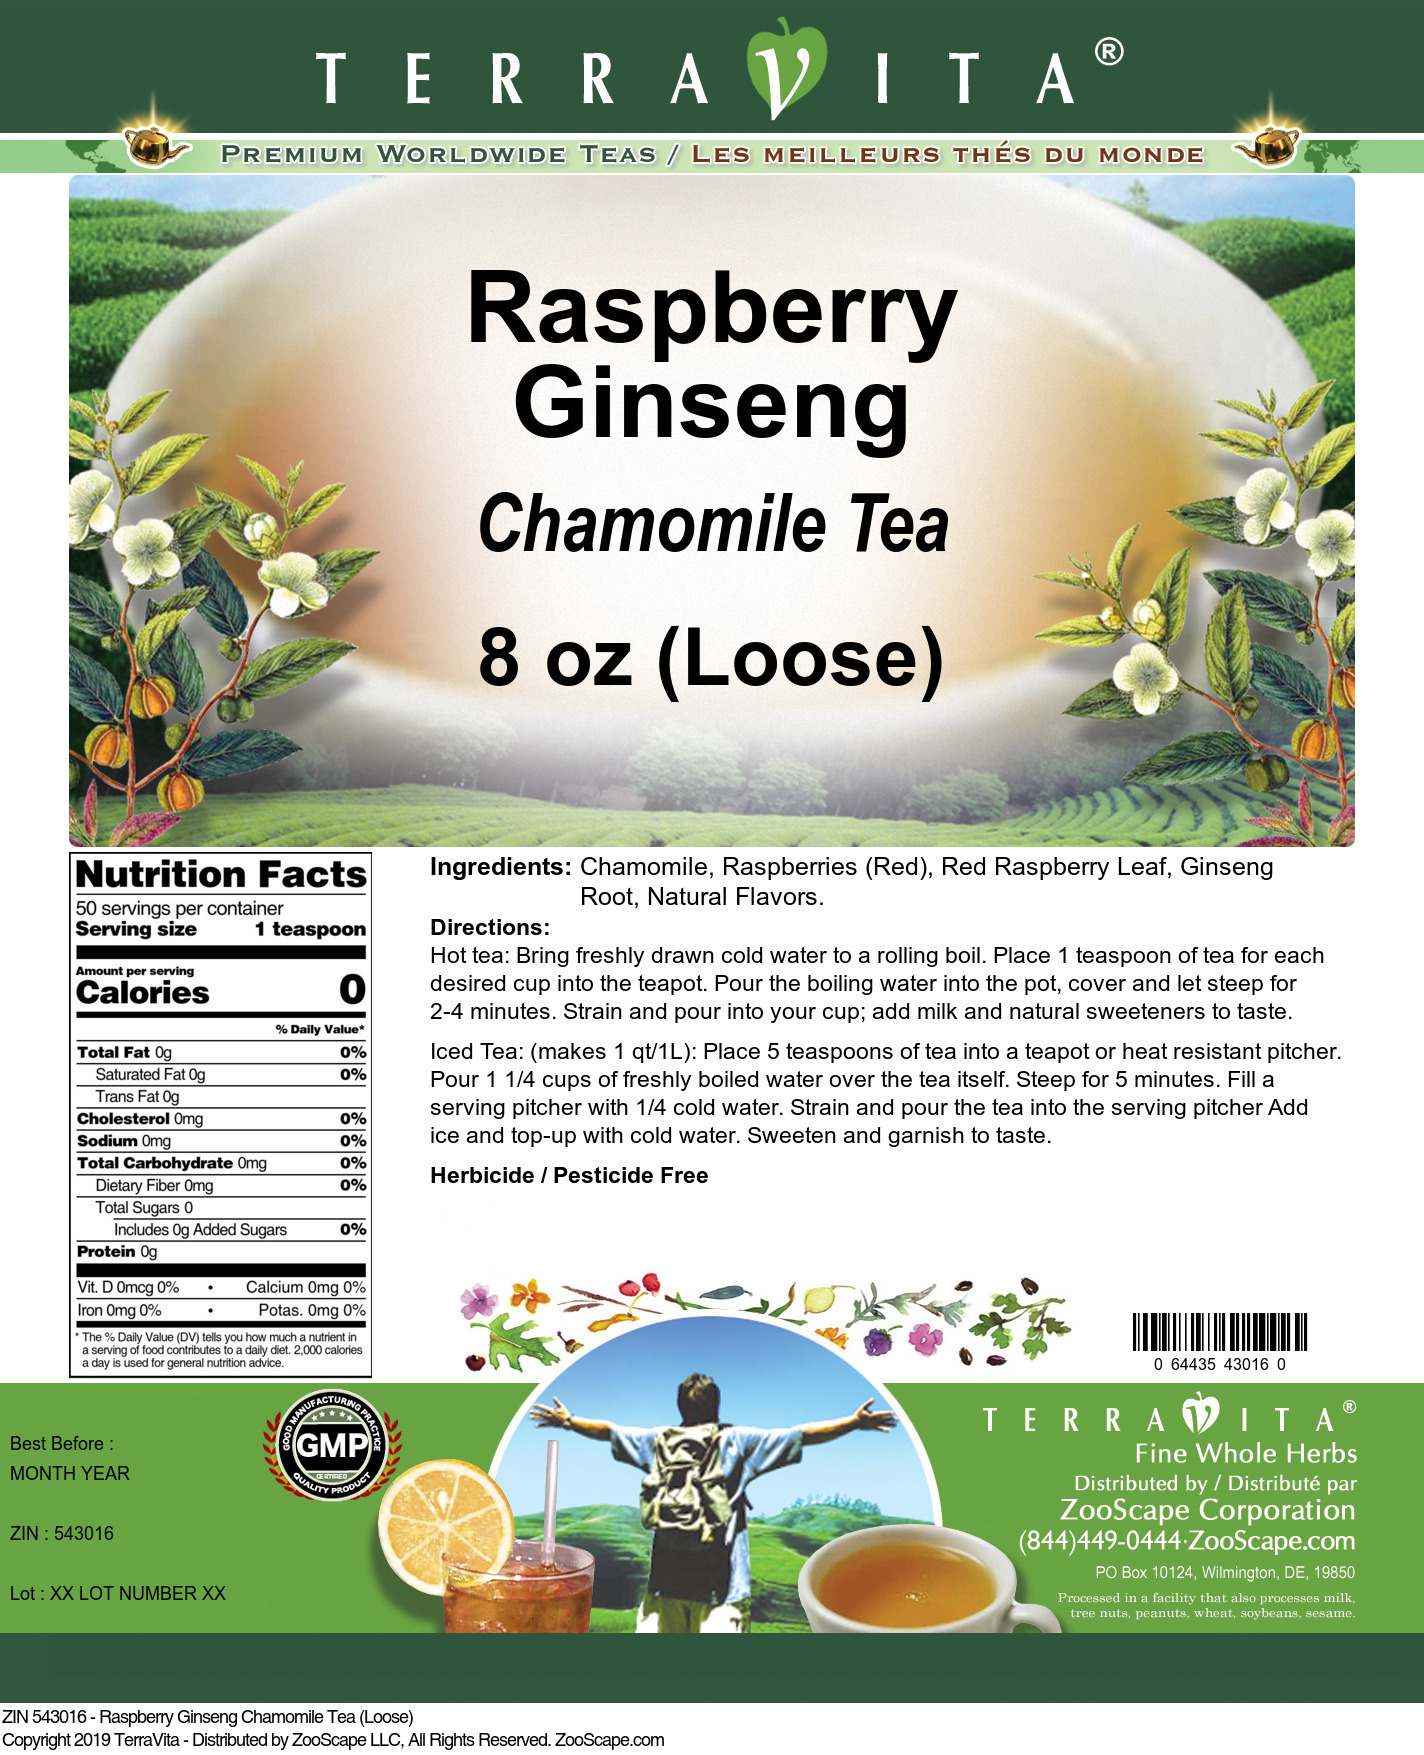 Raspberry Ginseng Chamomile Tea (Loose) - Label